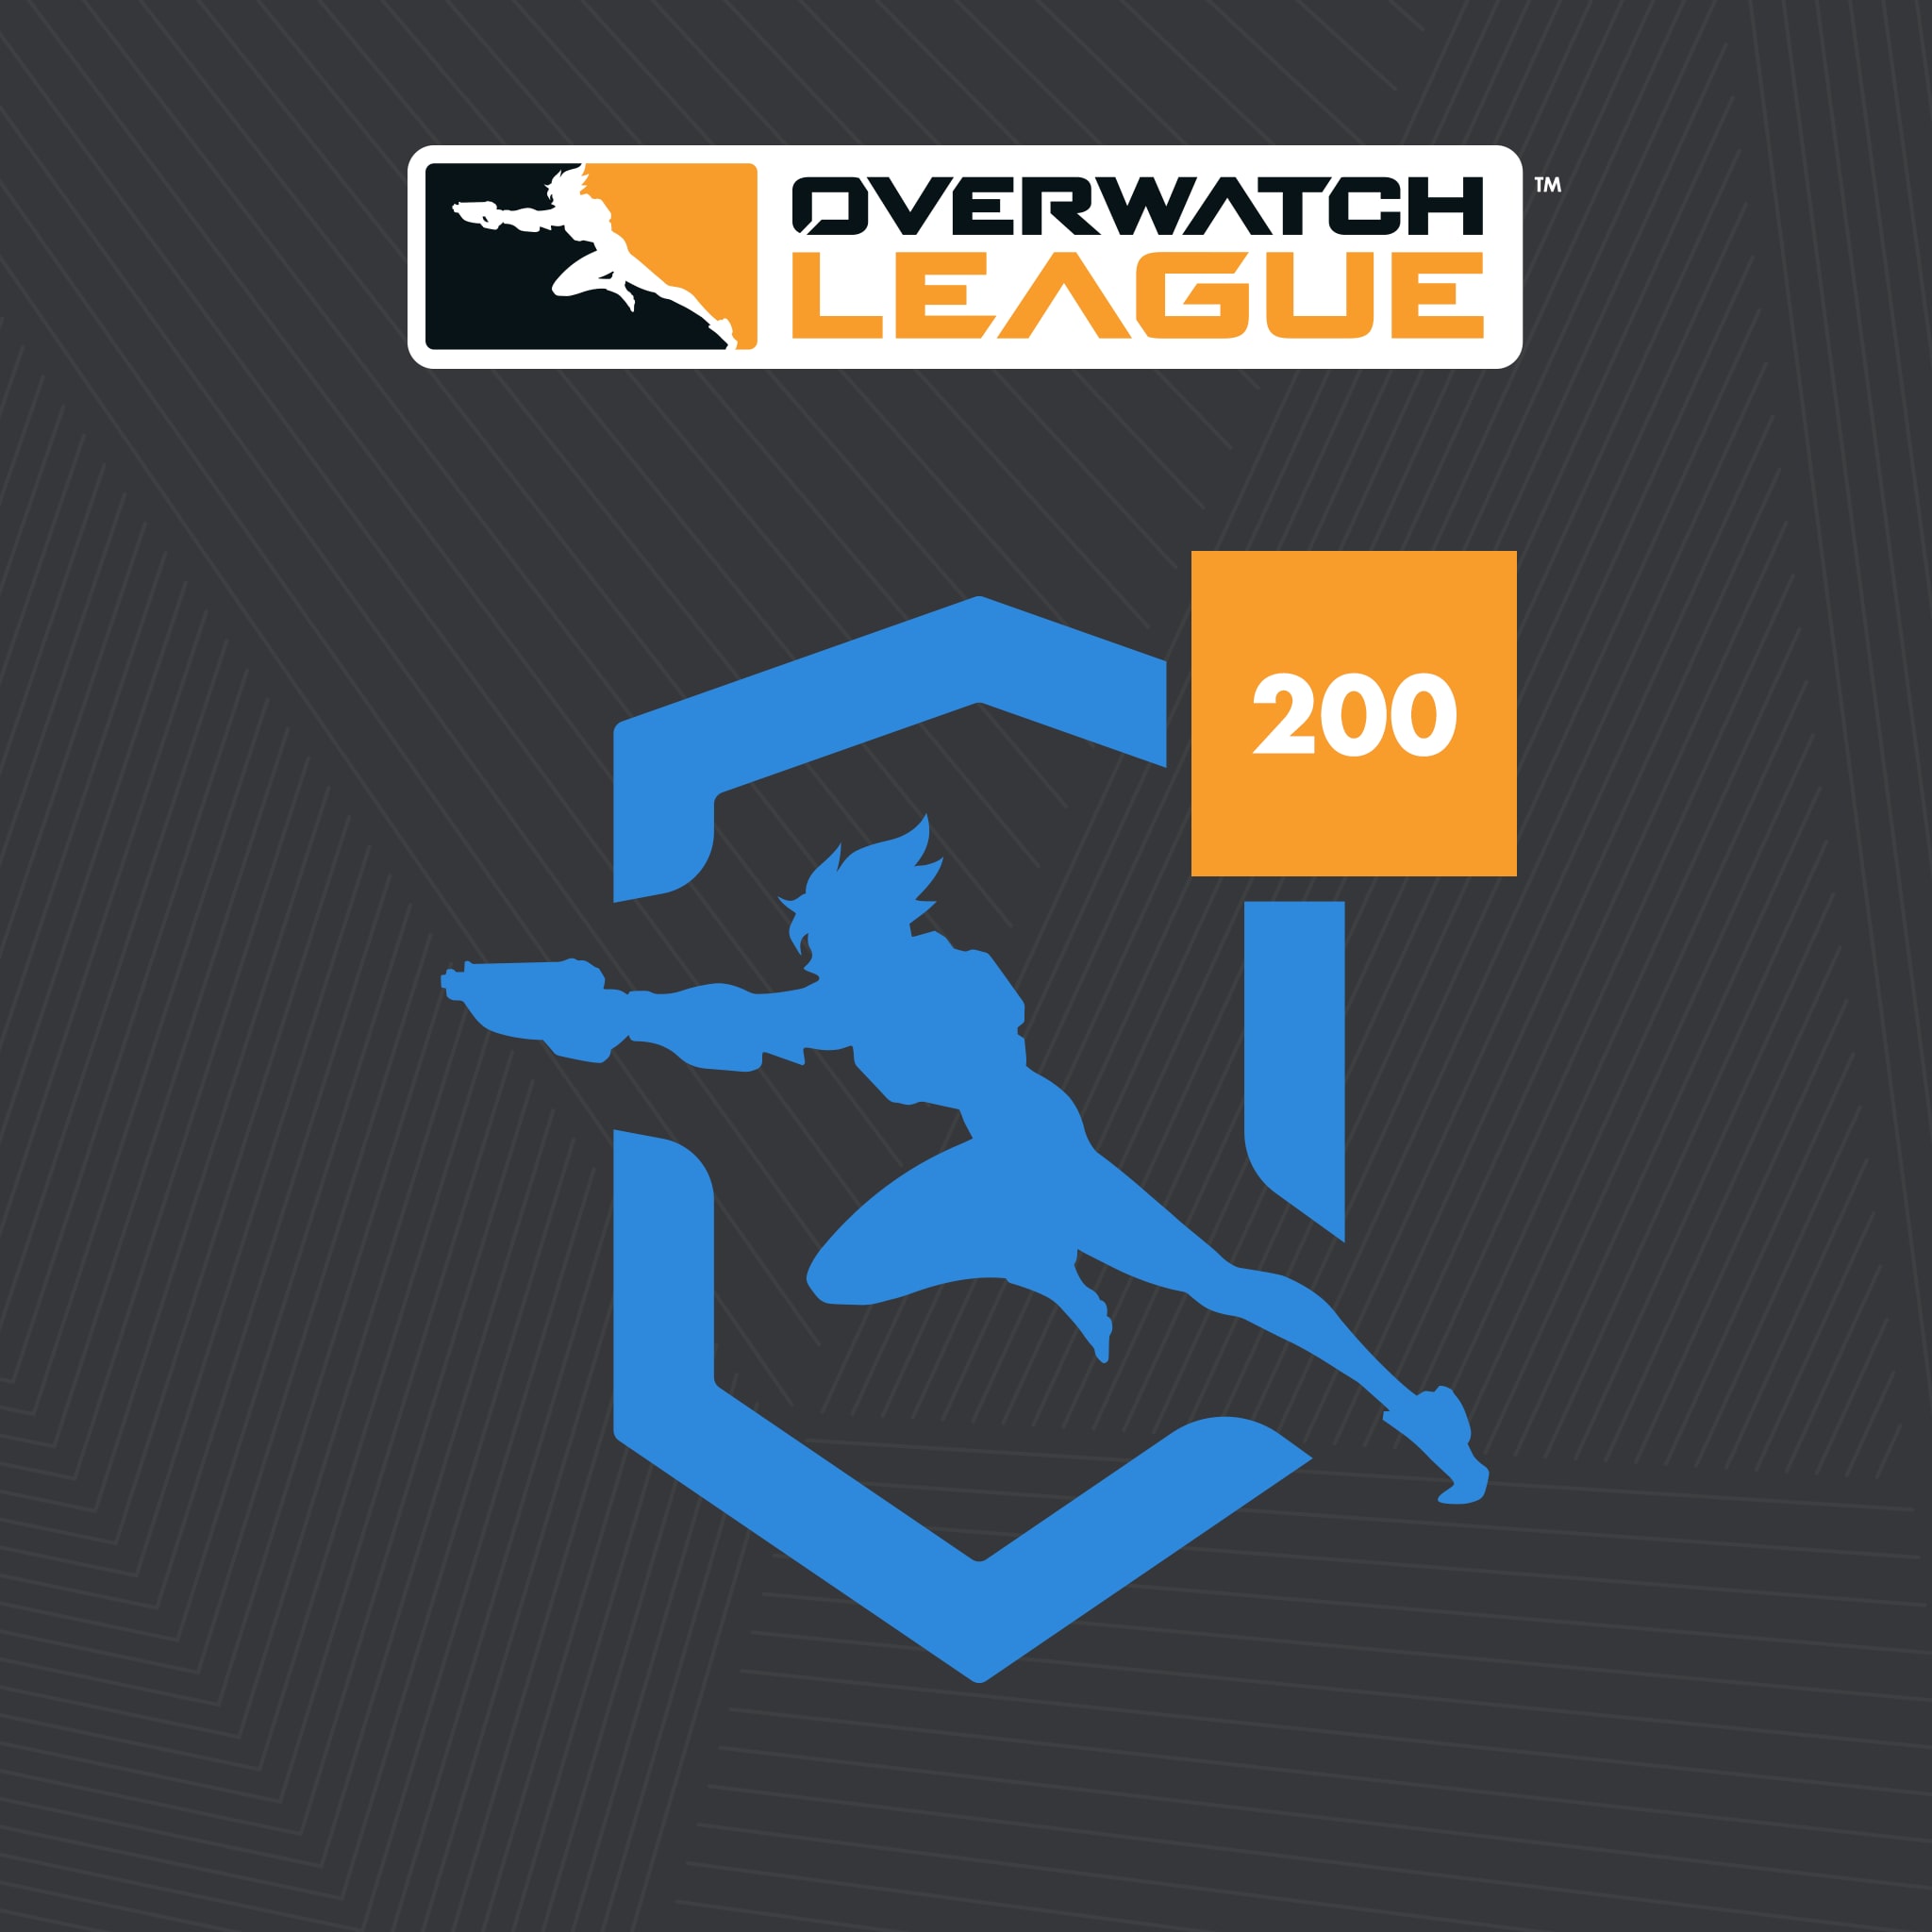 Overwatch League™ - 200 jetons de ligue